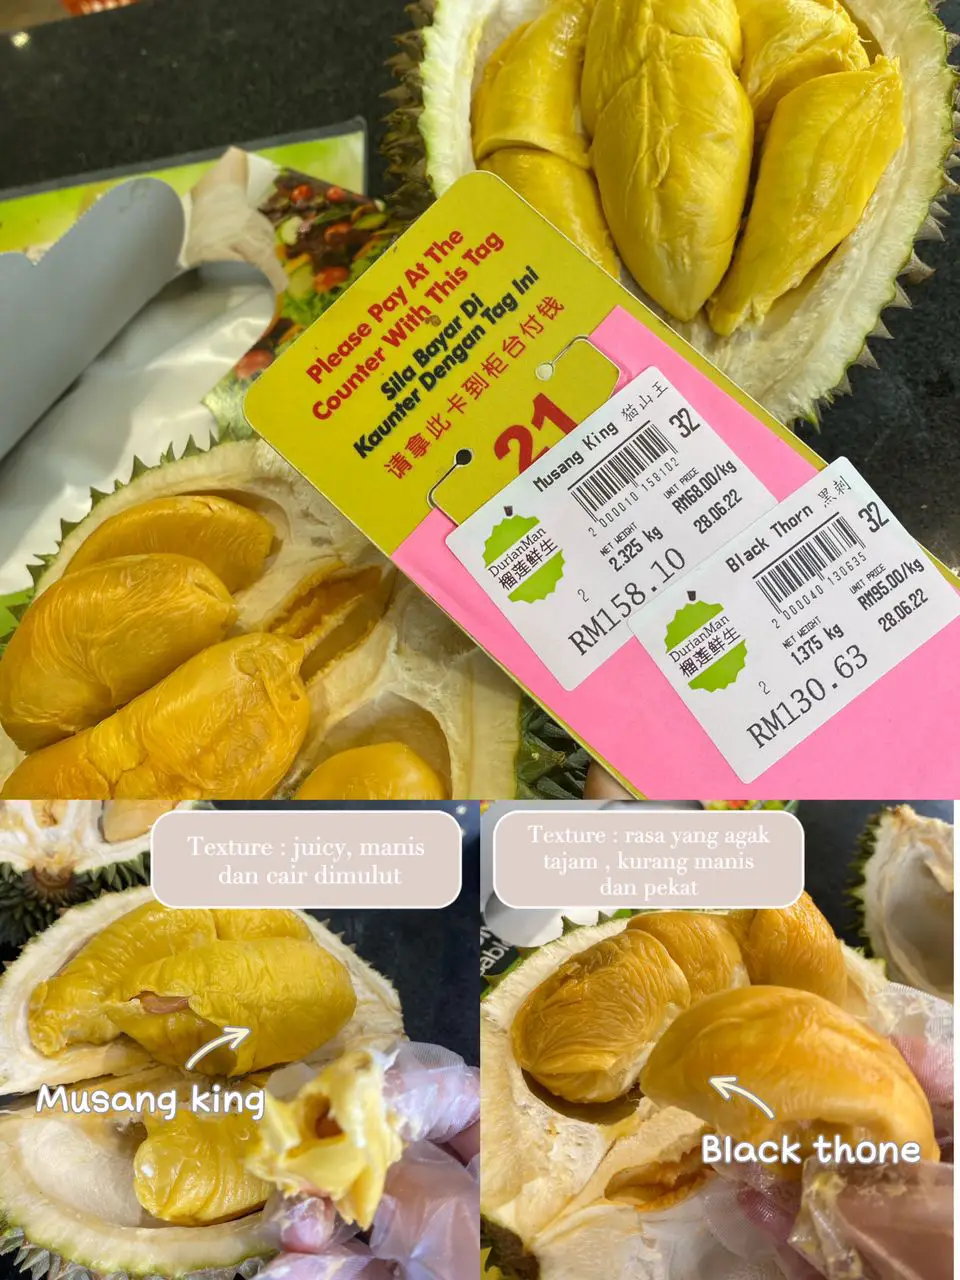 Favourite place for durian lover | Syamira Azharが投稿したフォト